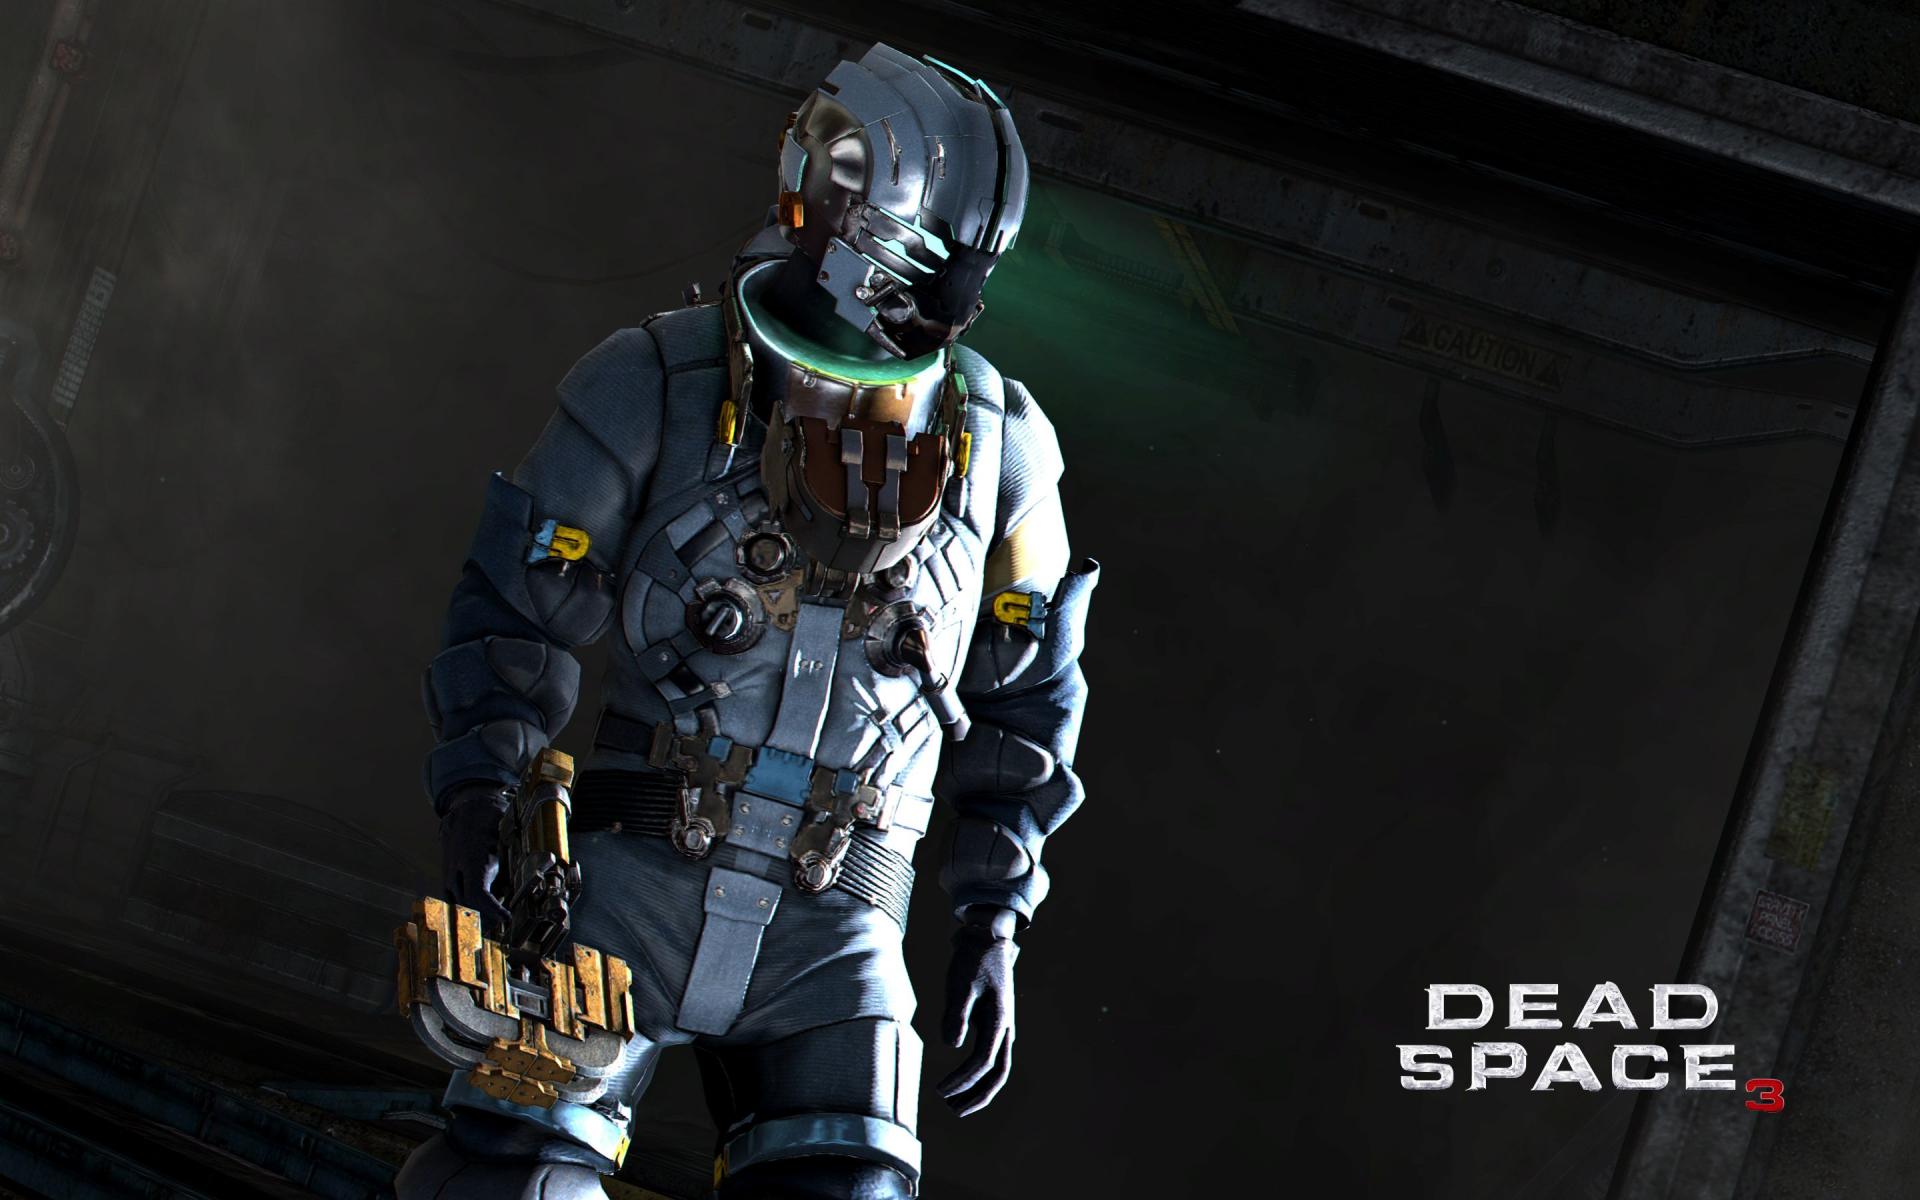 Dead Space Game Wallpaper Full HD Desktop 1080p